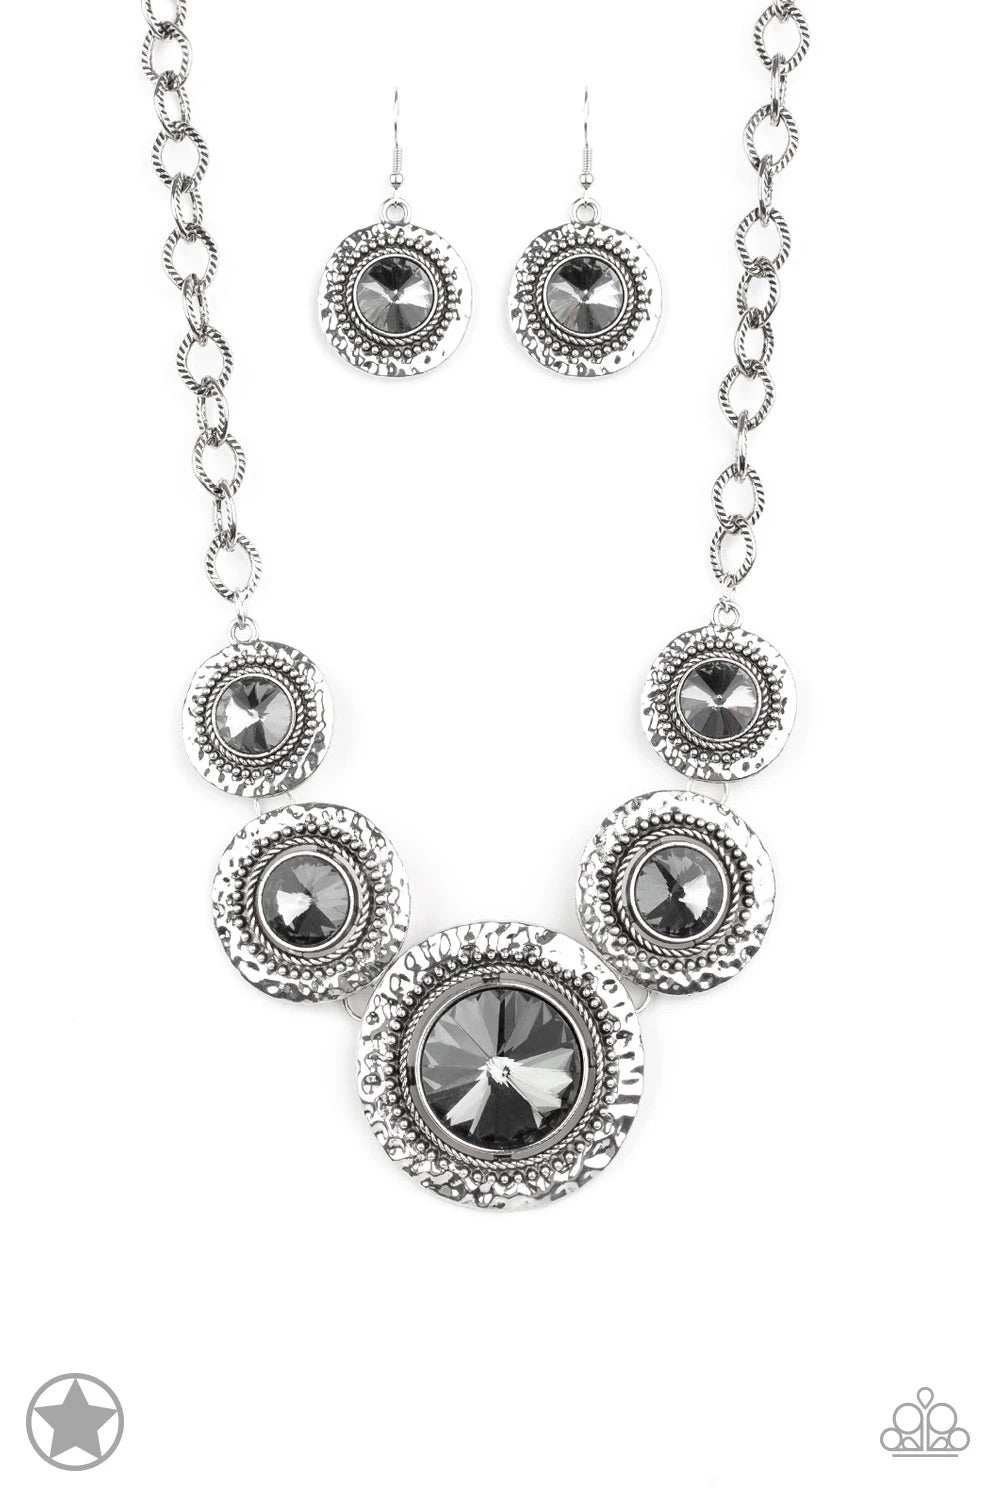 Global  Glamour Silver Necklace freeshipping - JewLz4u Gemstone Gallery